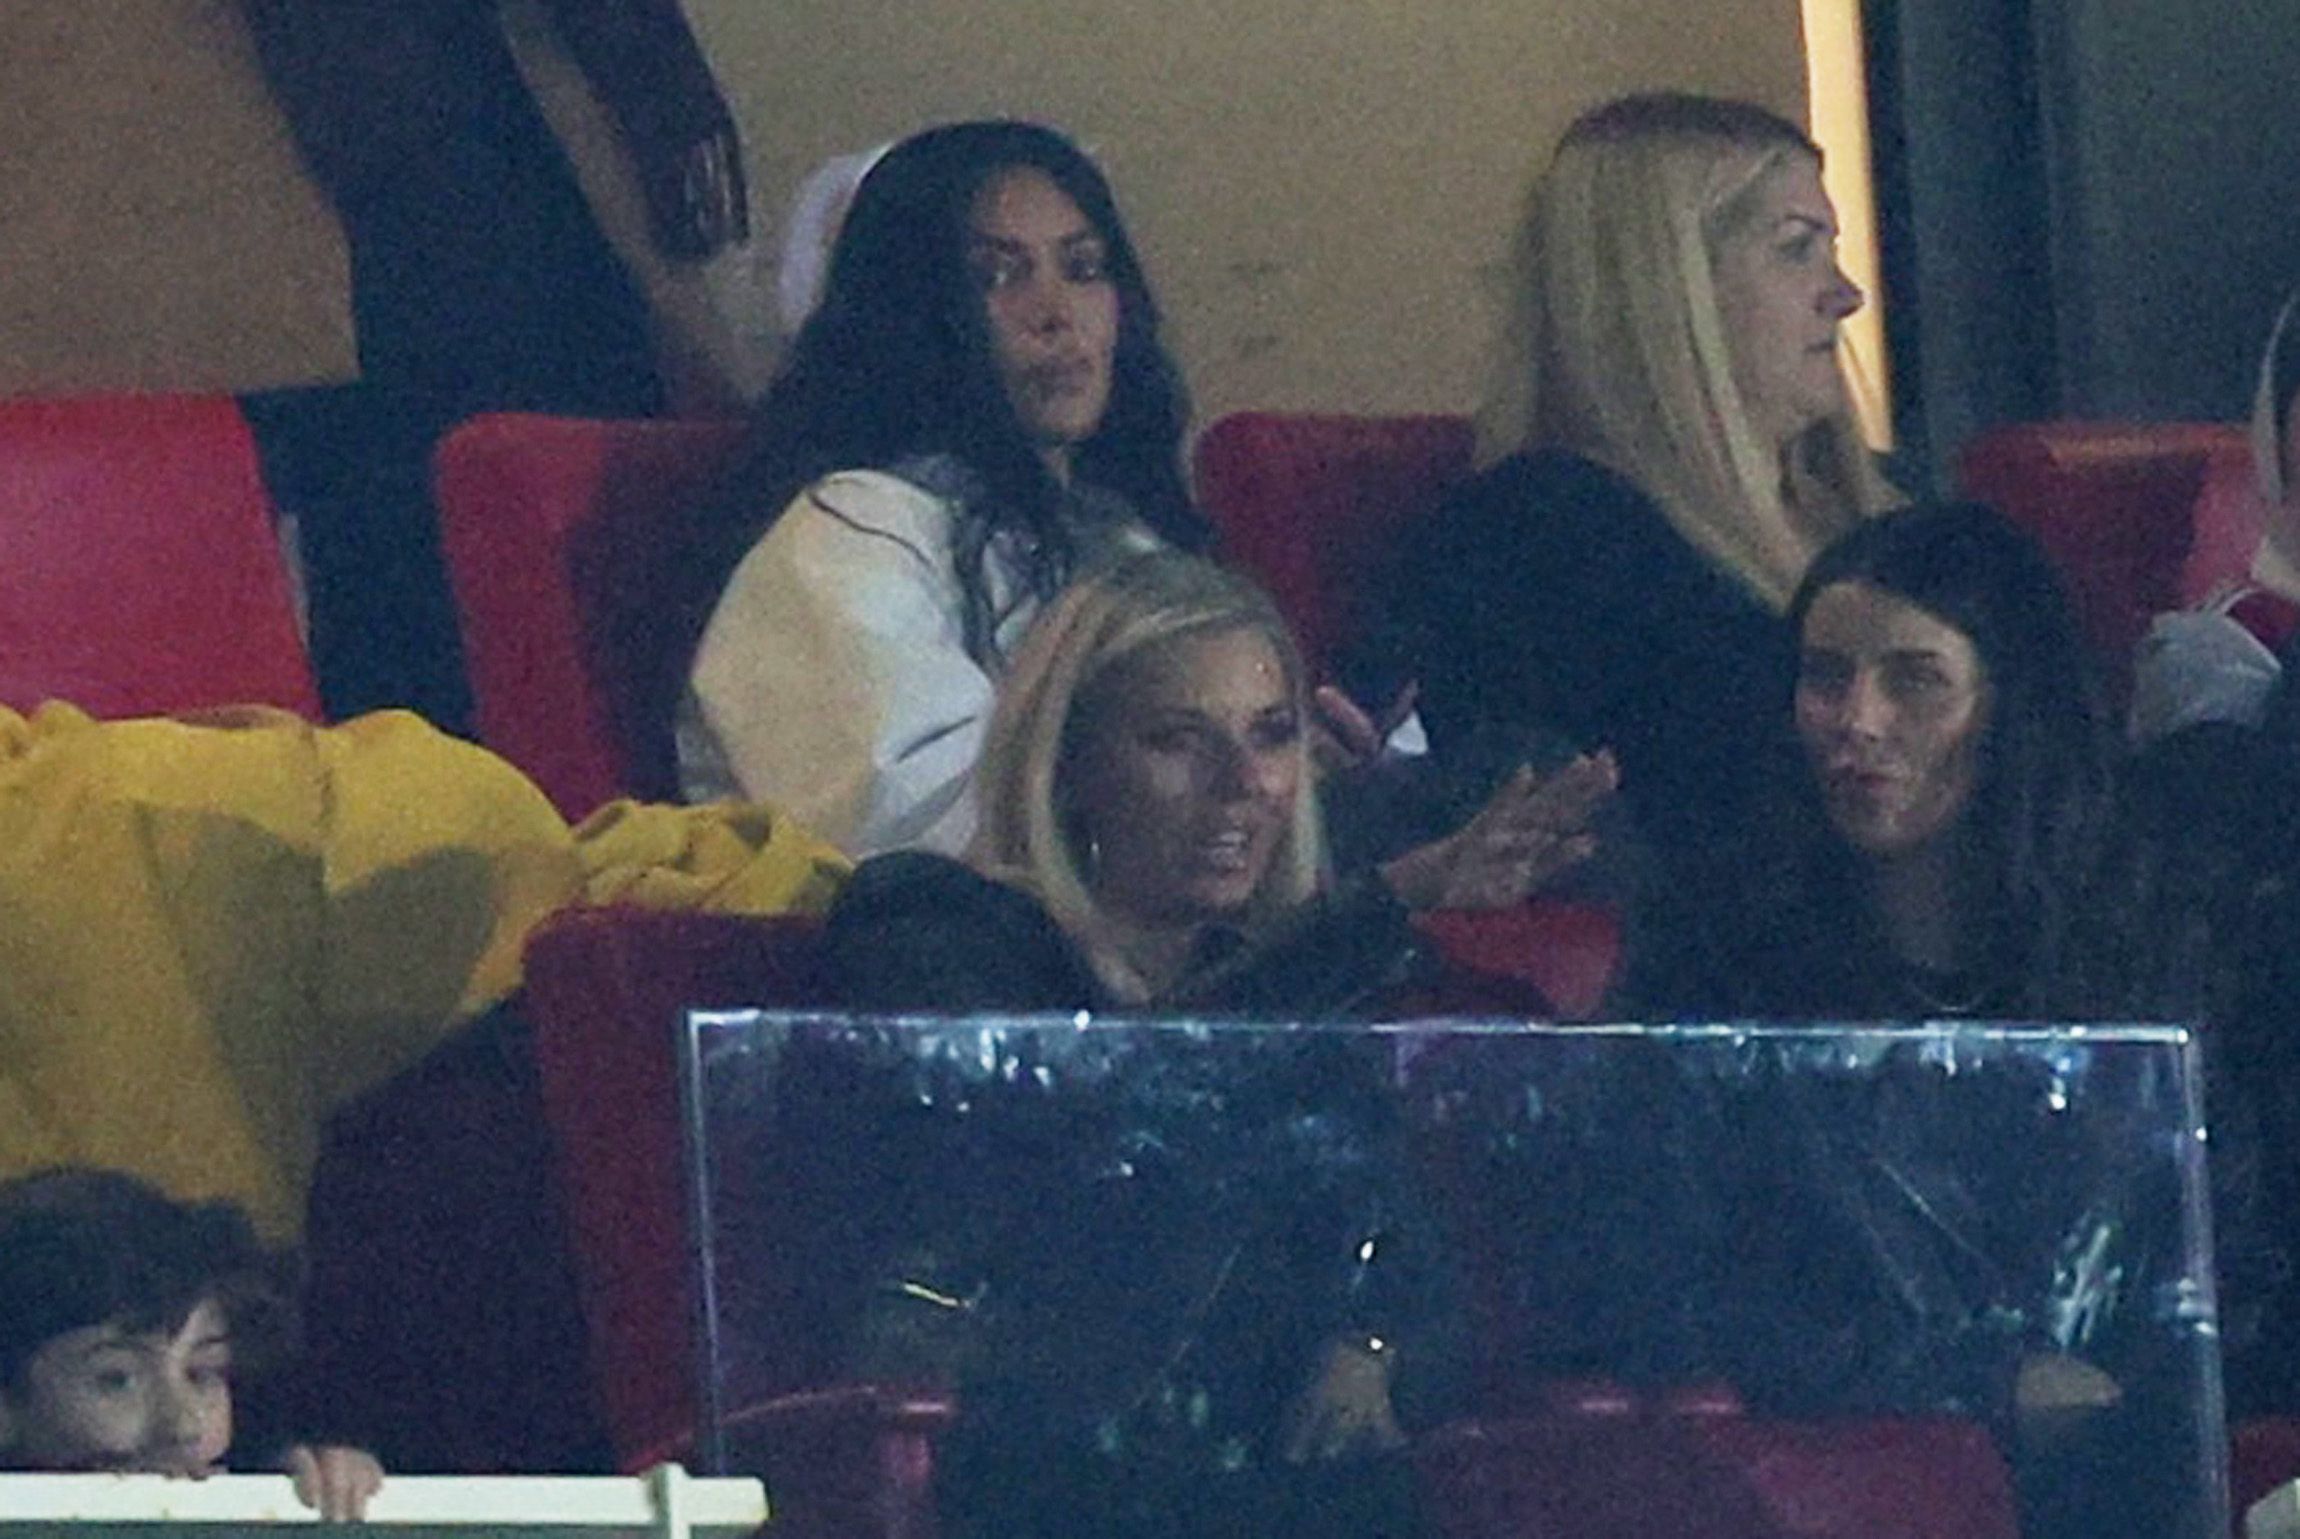 Kim Kardashian watches on at the Emirates during Arsenal vs Sporting CP